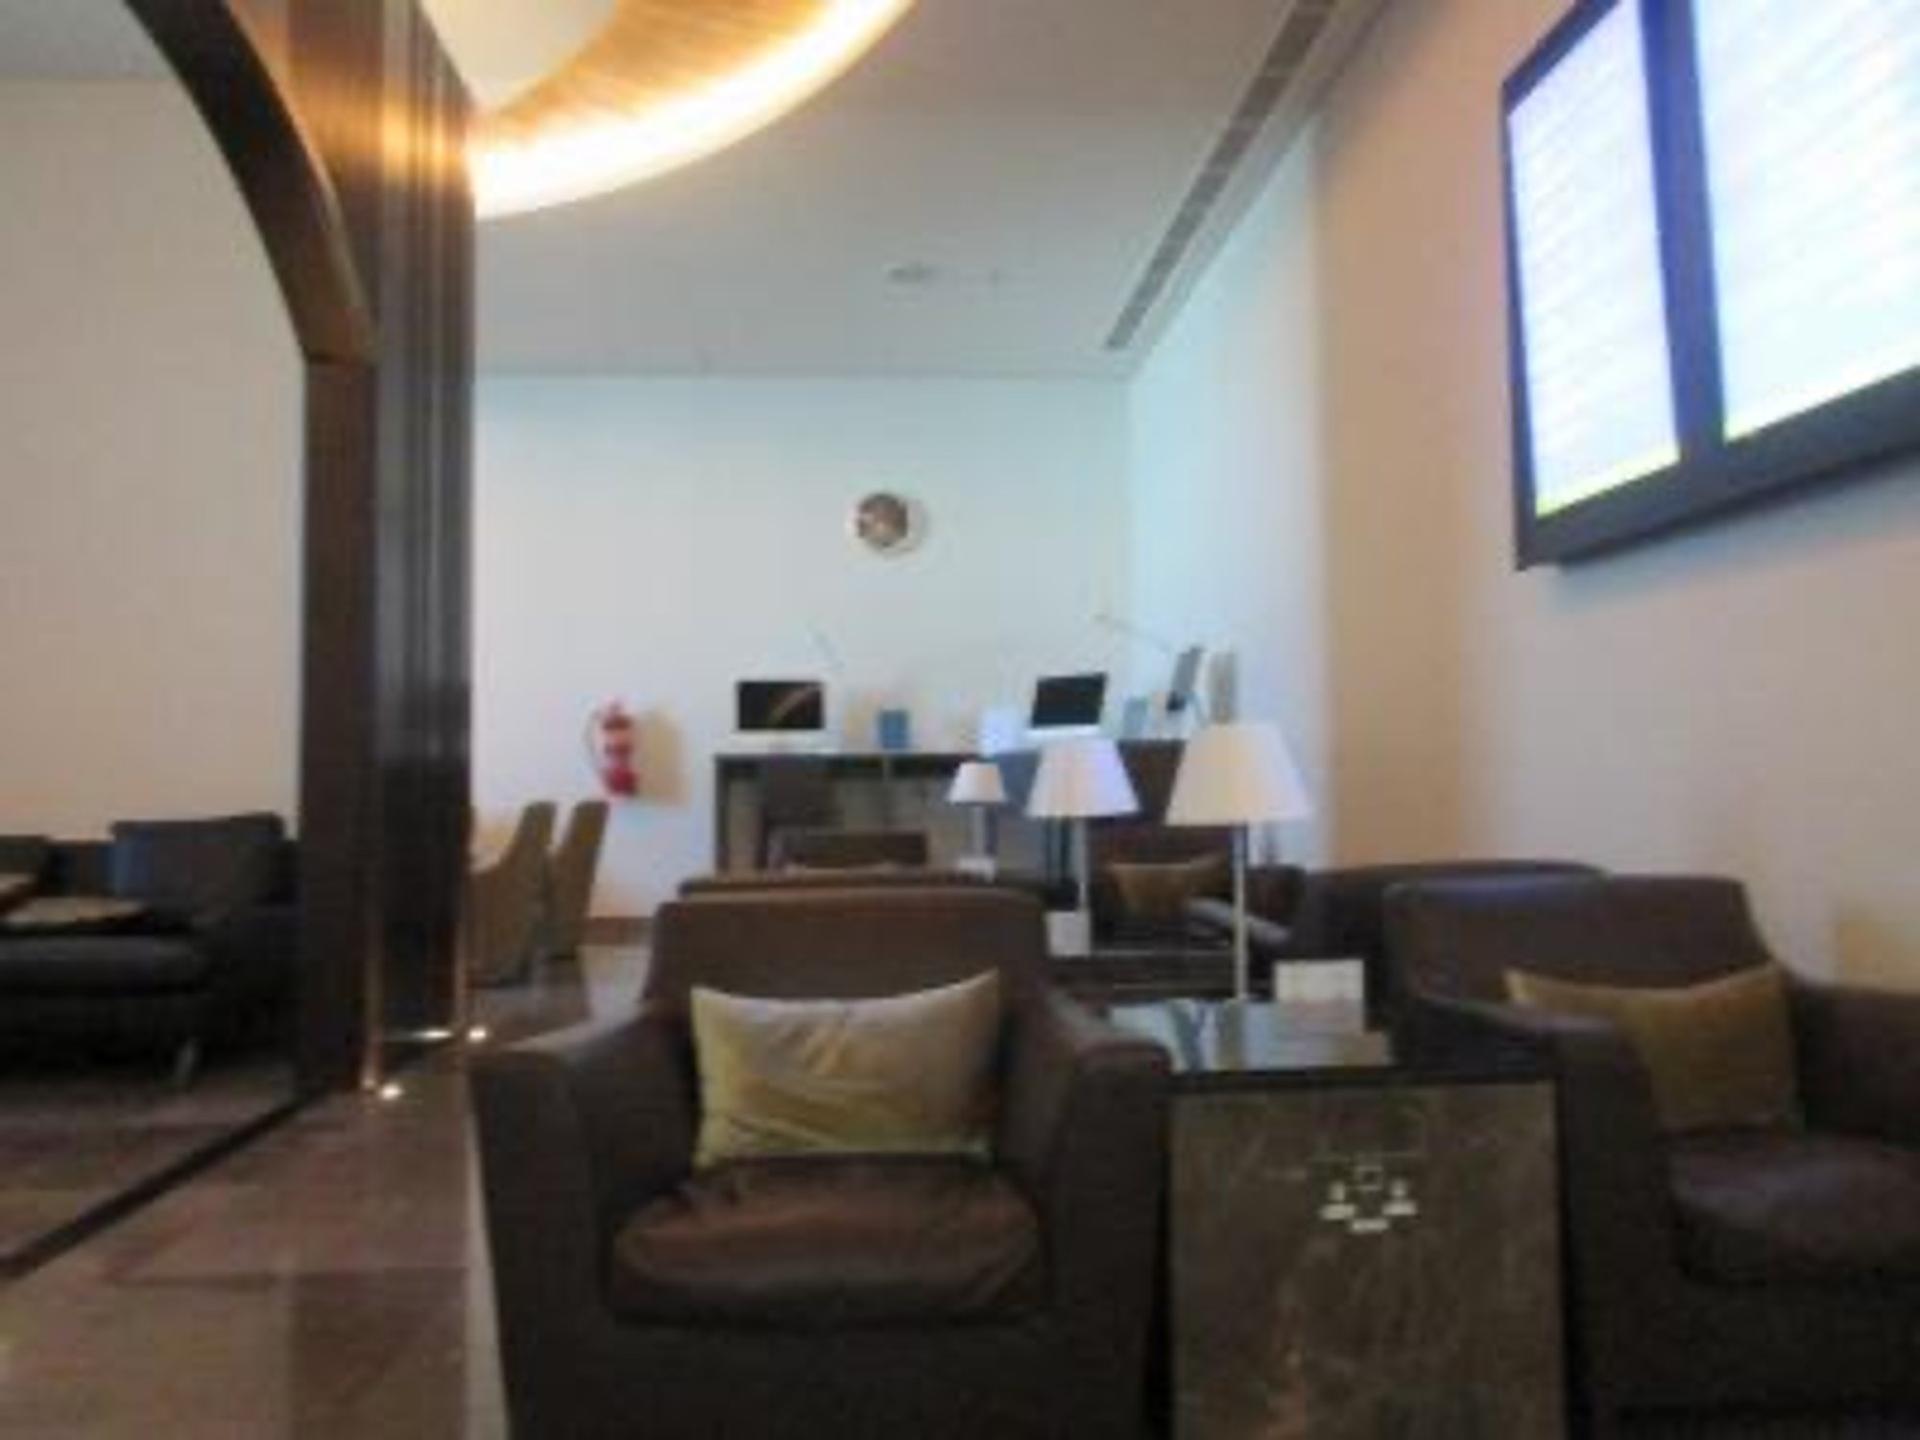 Oman Air Al Khareef Lounge image 8 of 9